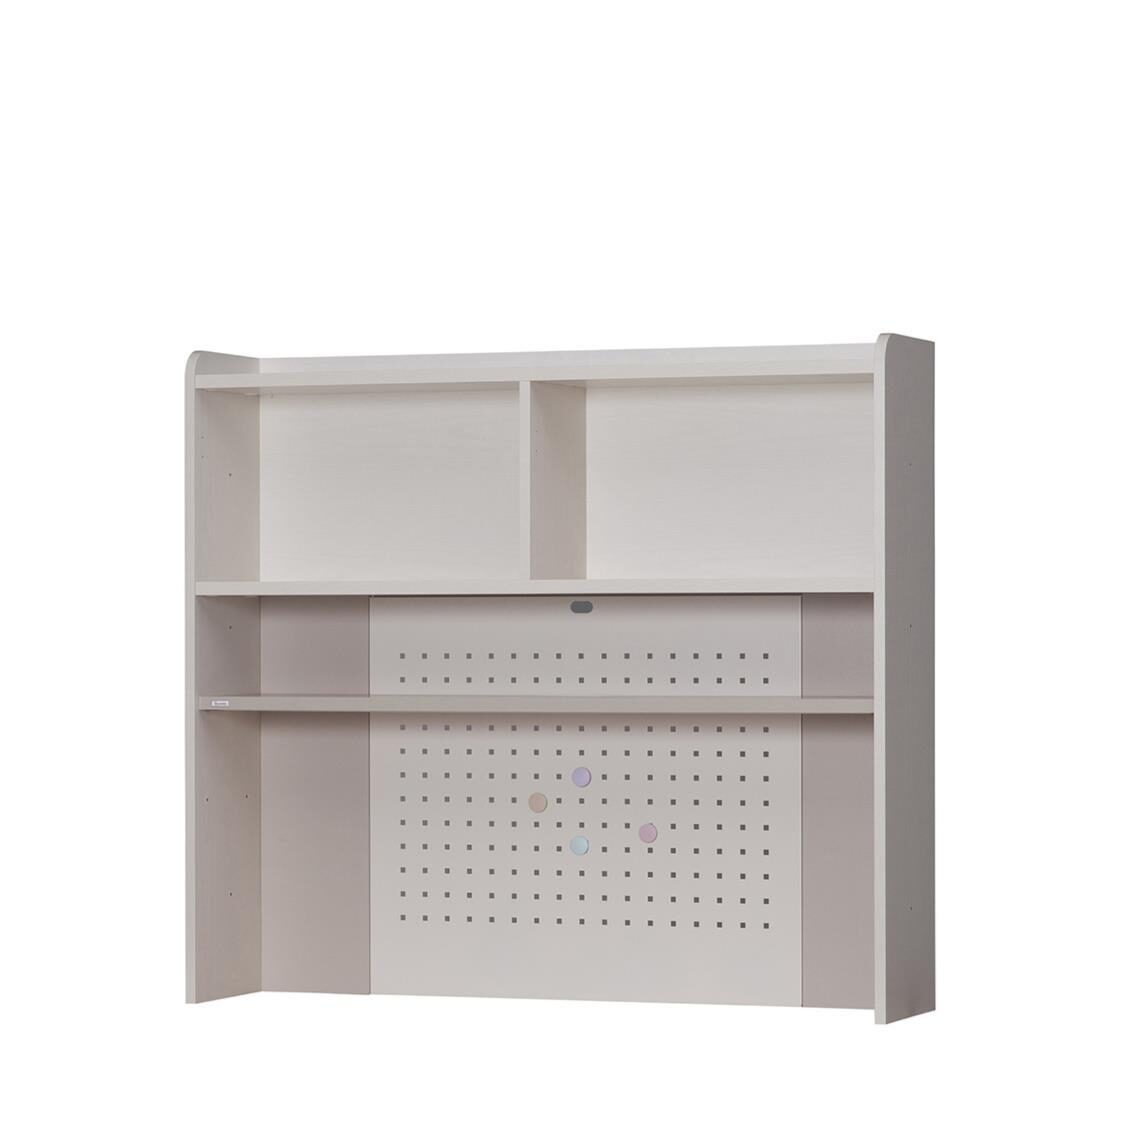 Iloom Linki Plus 1200W 4 Level Bookshelf for Motion  Smart Desk FIVBGM